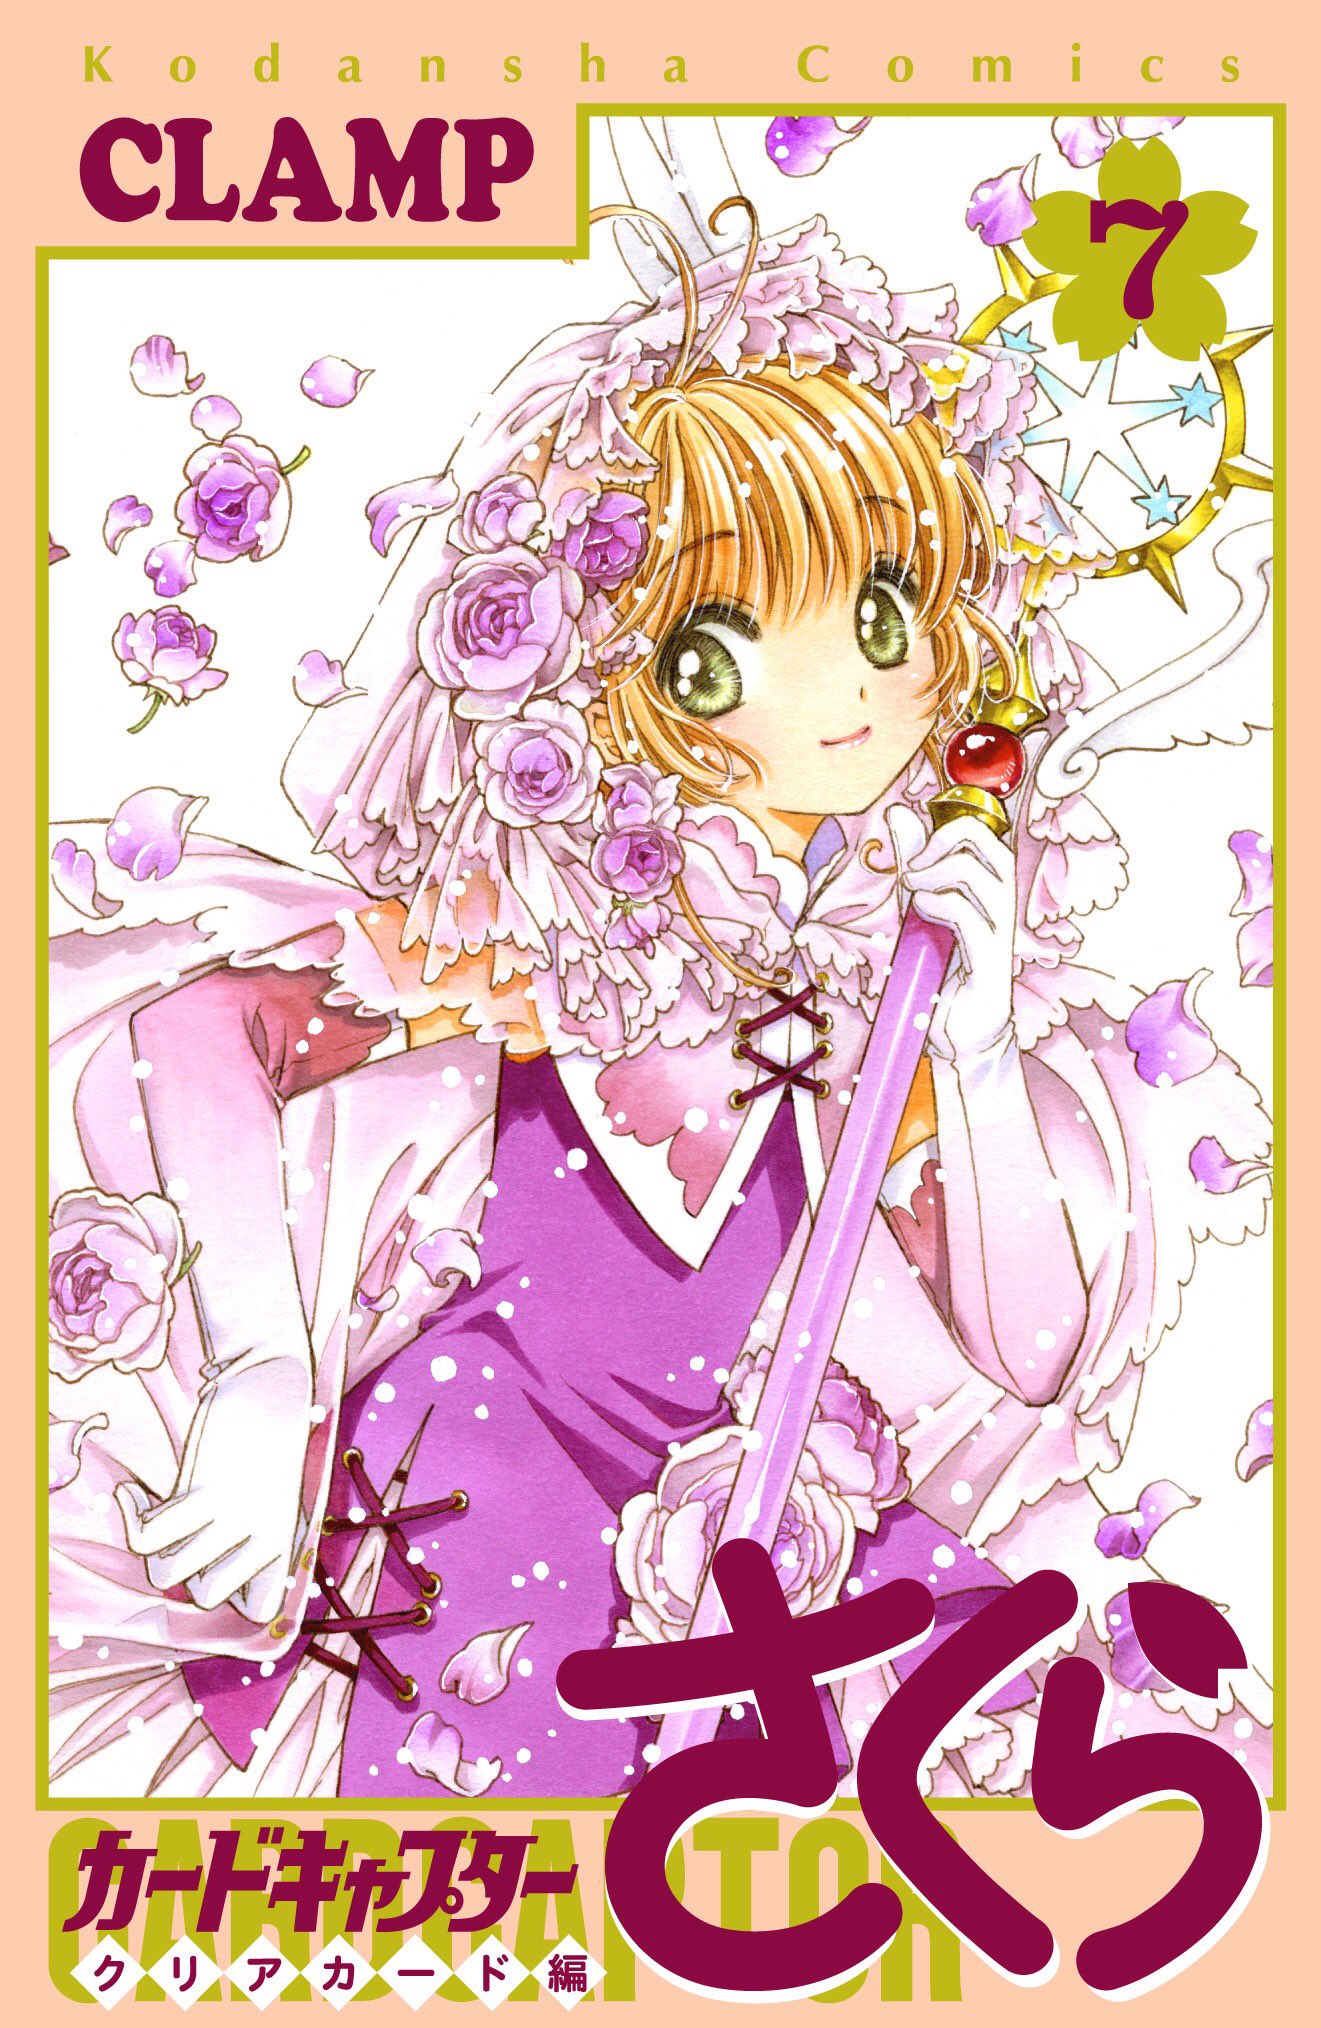 Card Captor Sakura – Clear Card arc – Chapter 2 (Updated)